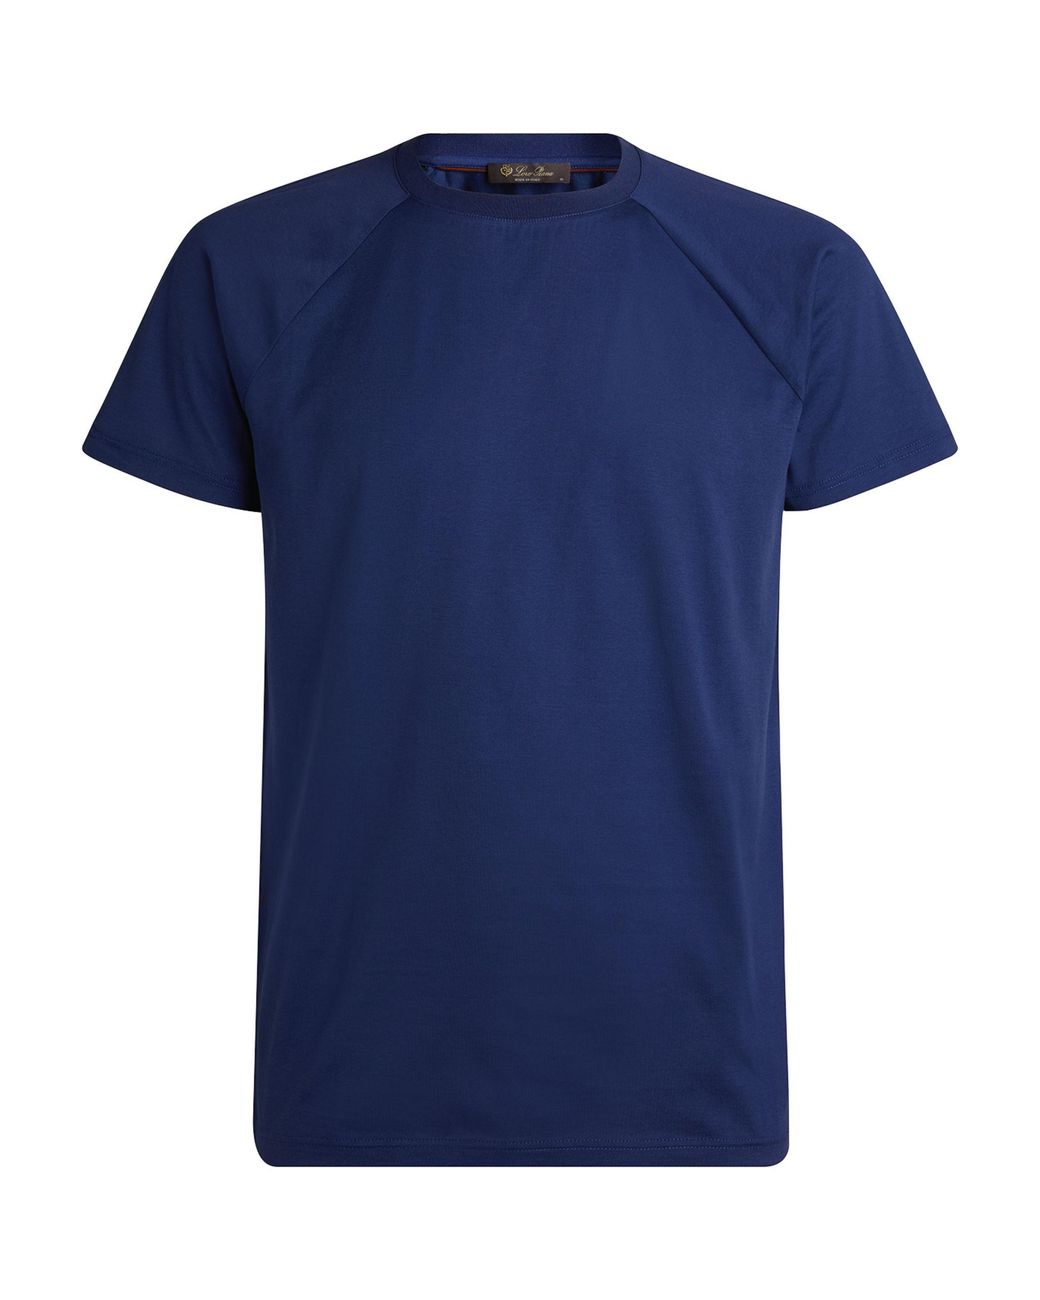 Loro Piana Cotton T-shirt in Blue for Men - Lyst